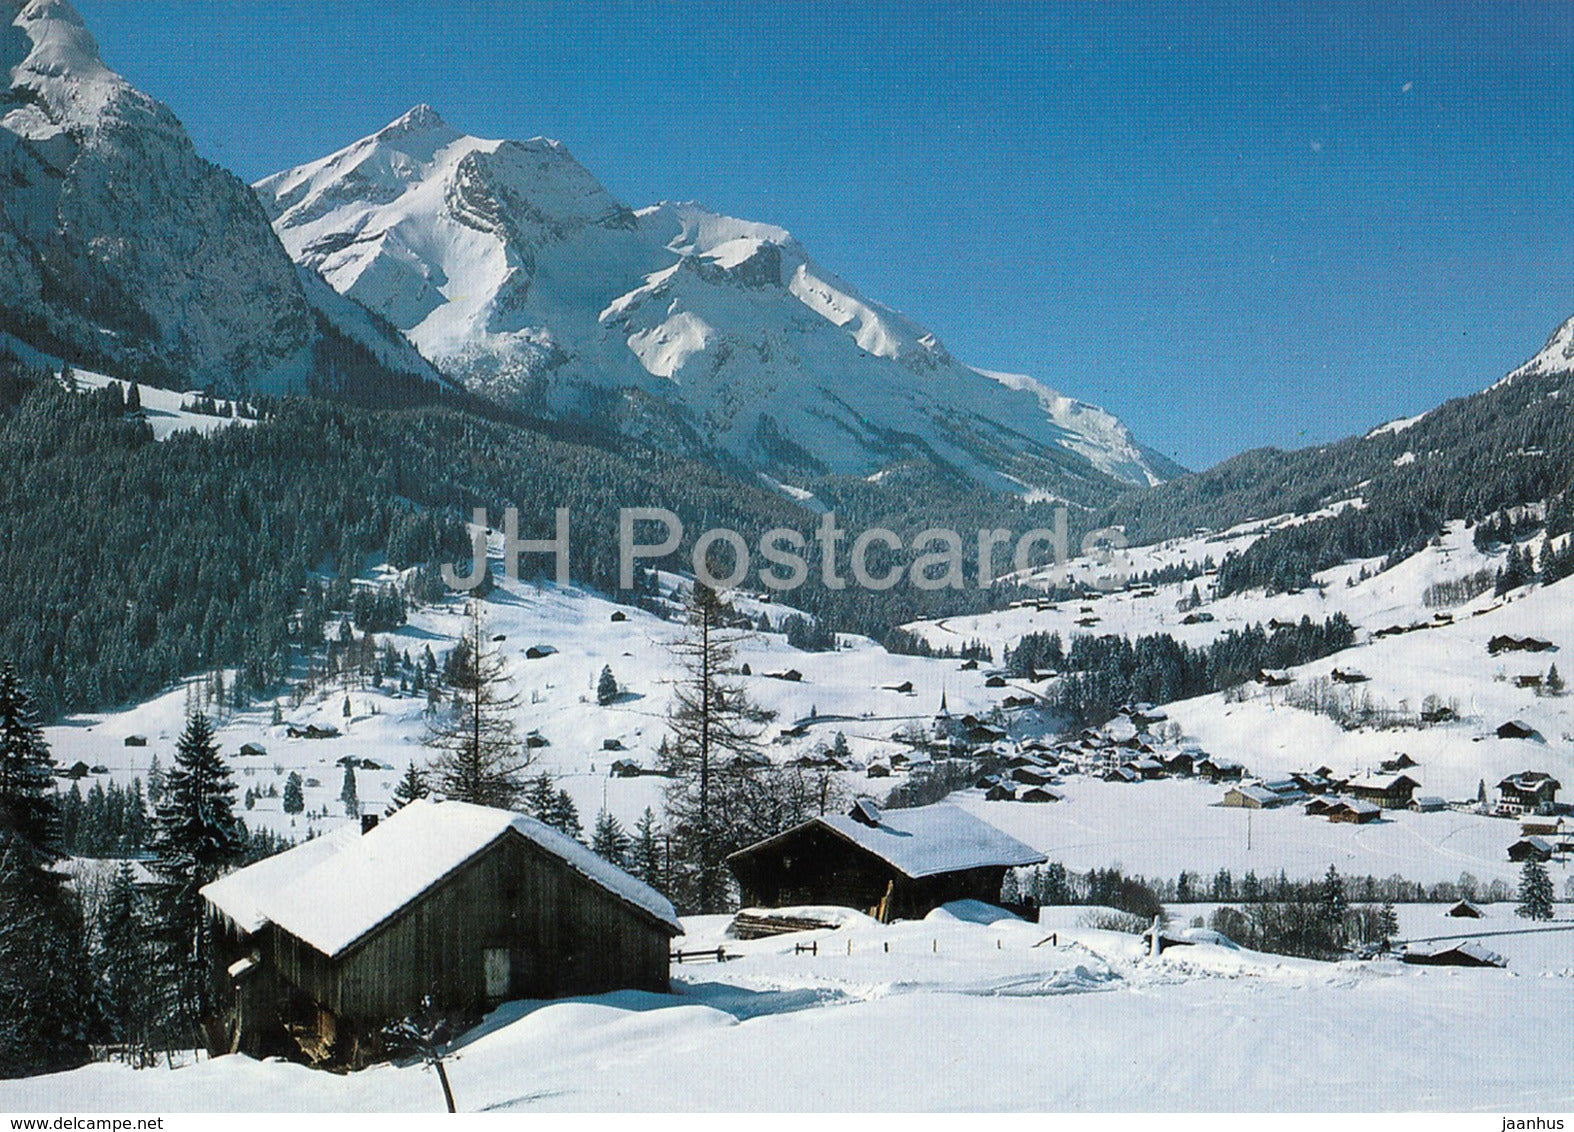 Gsteig b. Gstaad - Oldenhorn - 120 - 1981 - Switzerland - used - JH Postcards